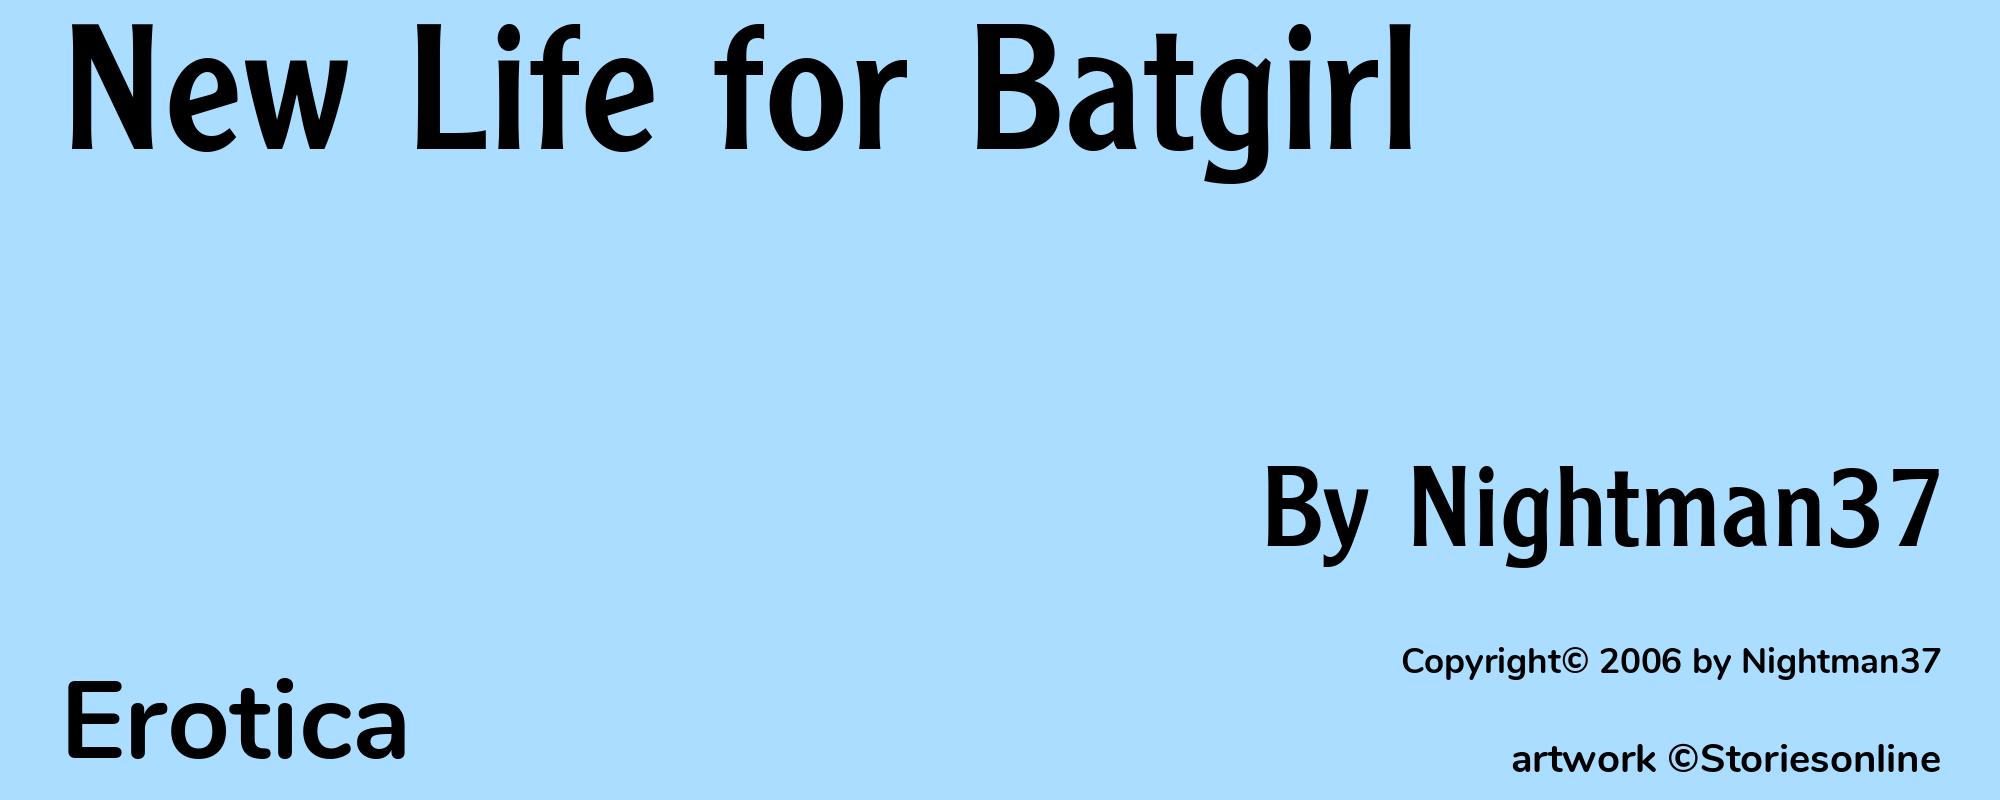 New Life for Batgirl - Cover